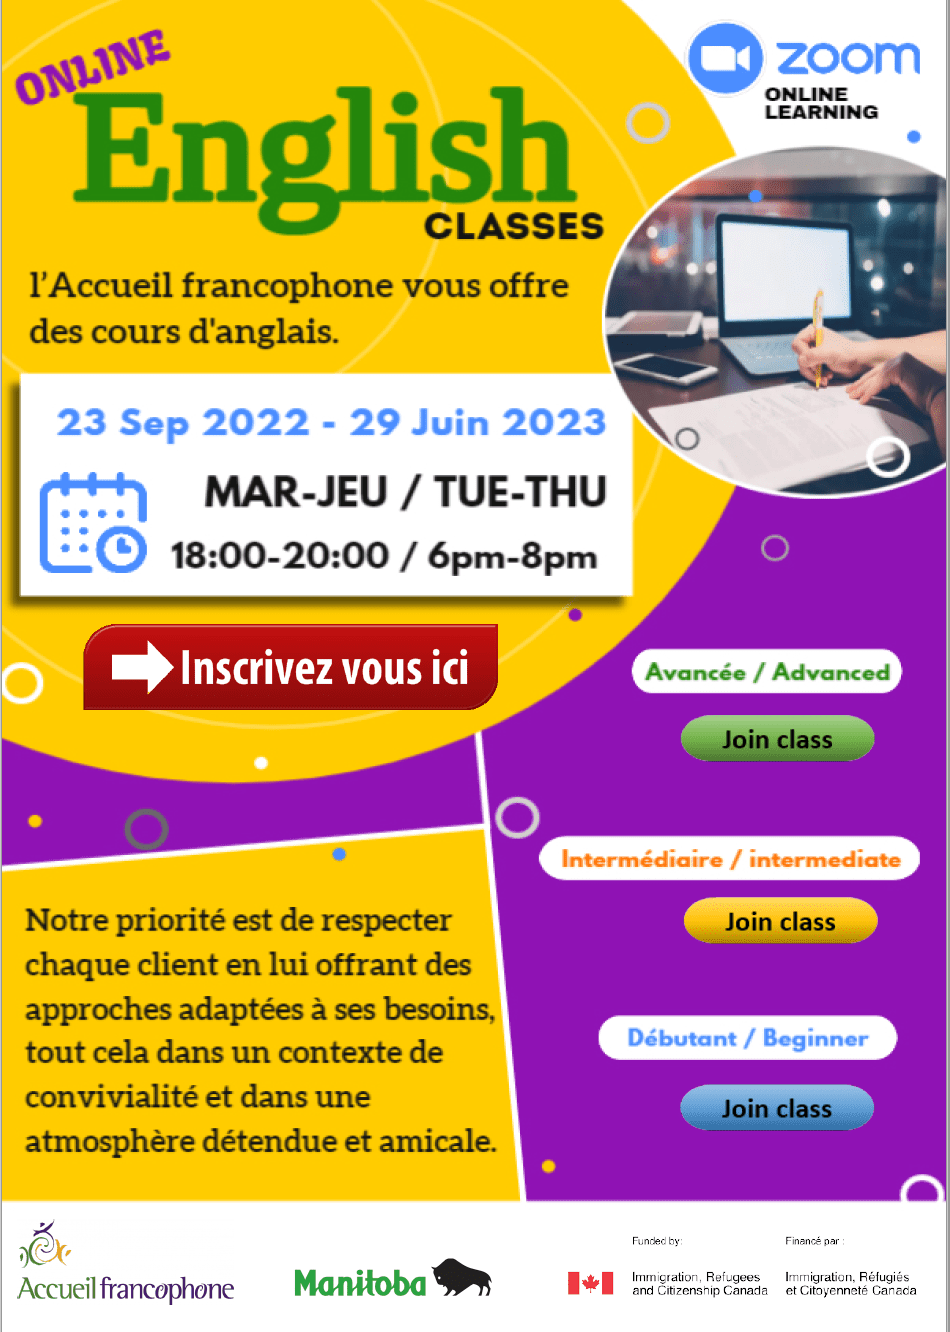 English Online Classes - Accueil francophone